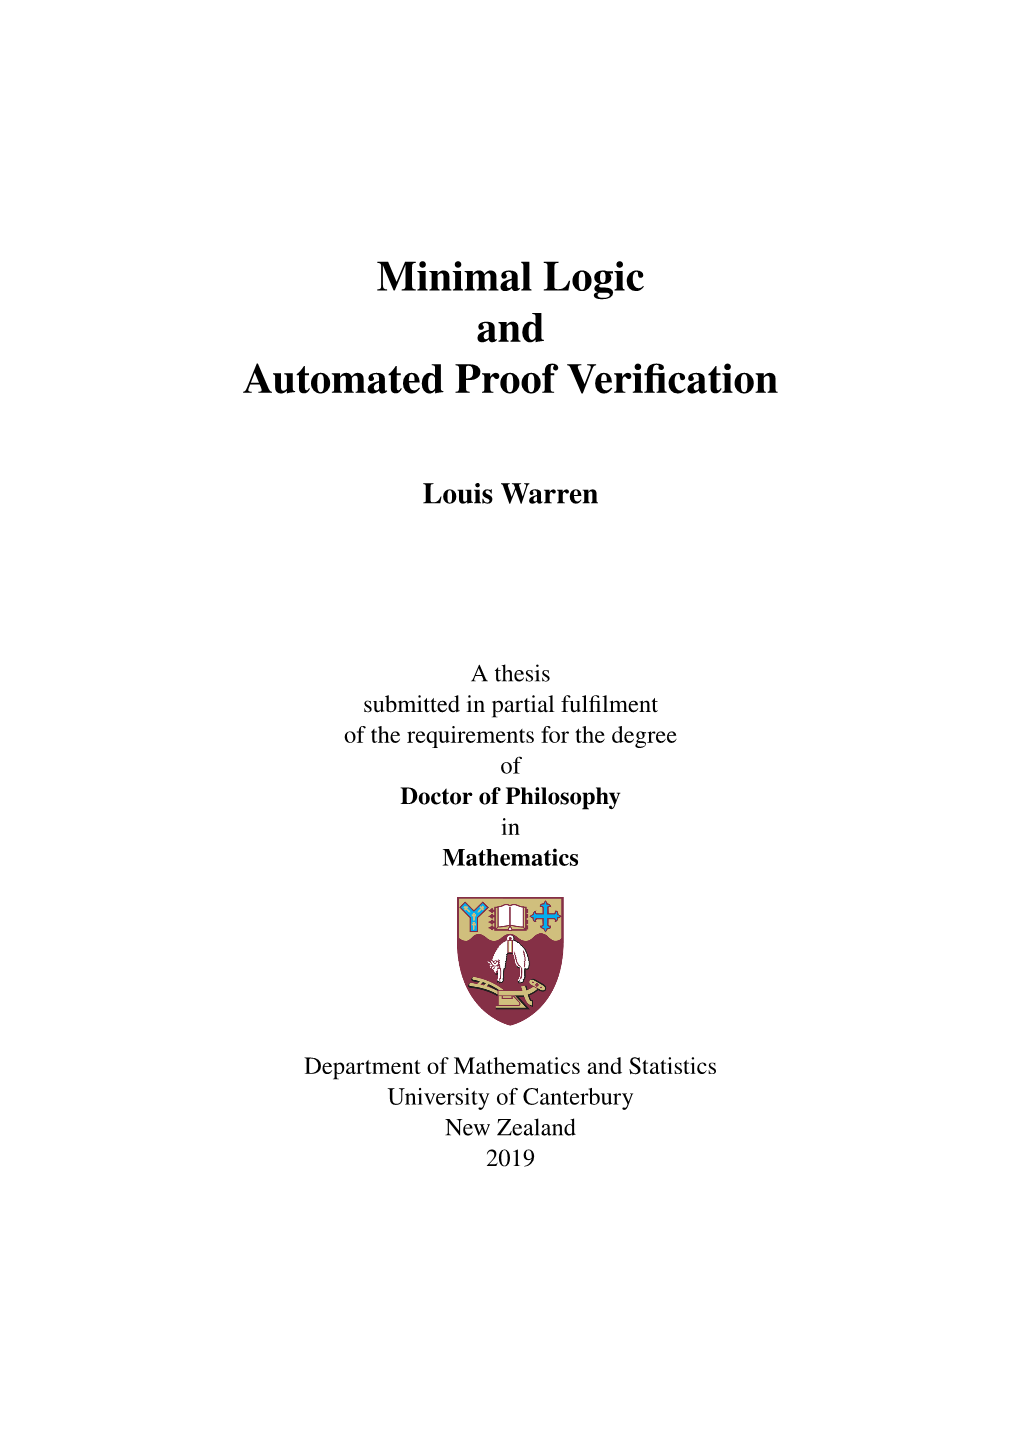 Minimal Logic and Automated Proof Verification